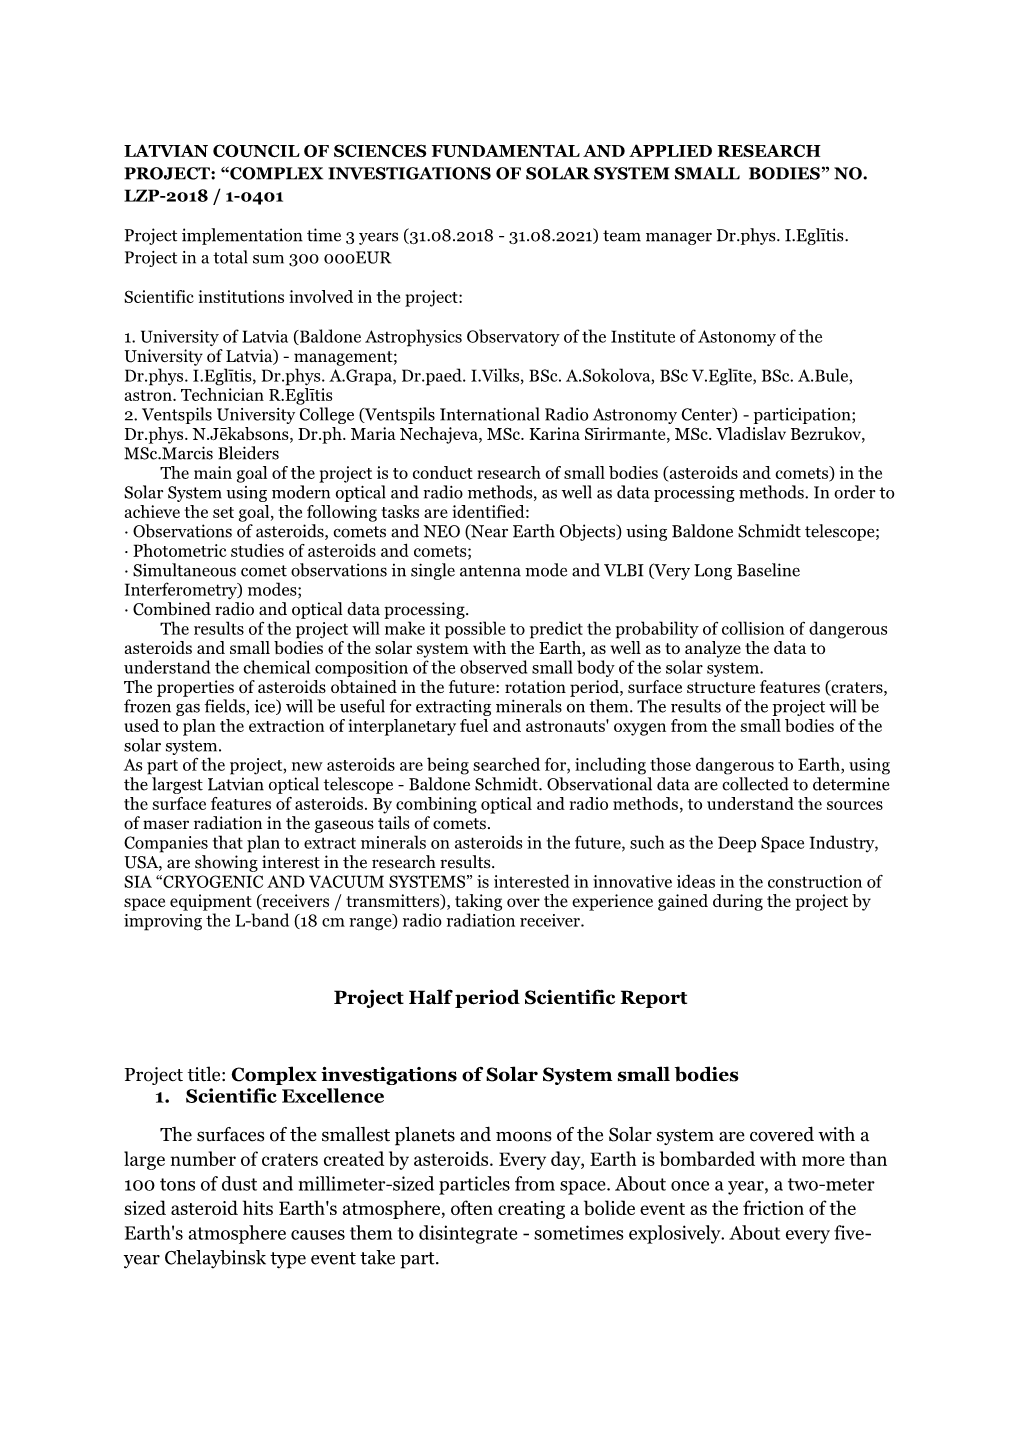 Project Half Period Scientific Report Project Title: Complex Investigations